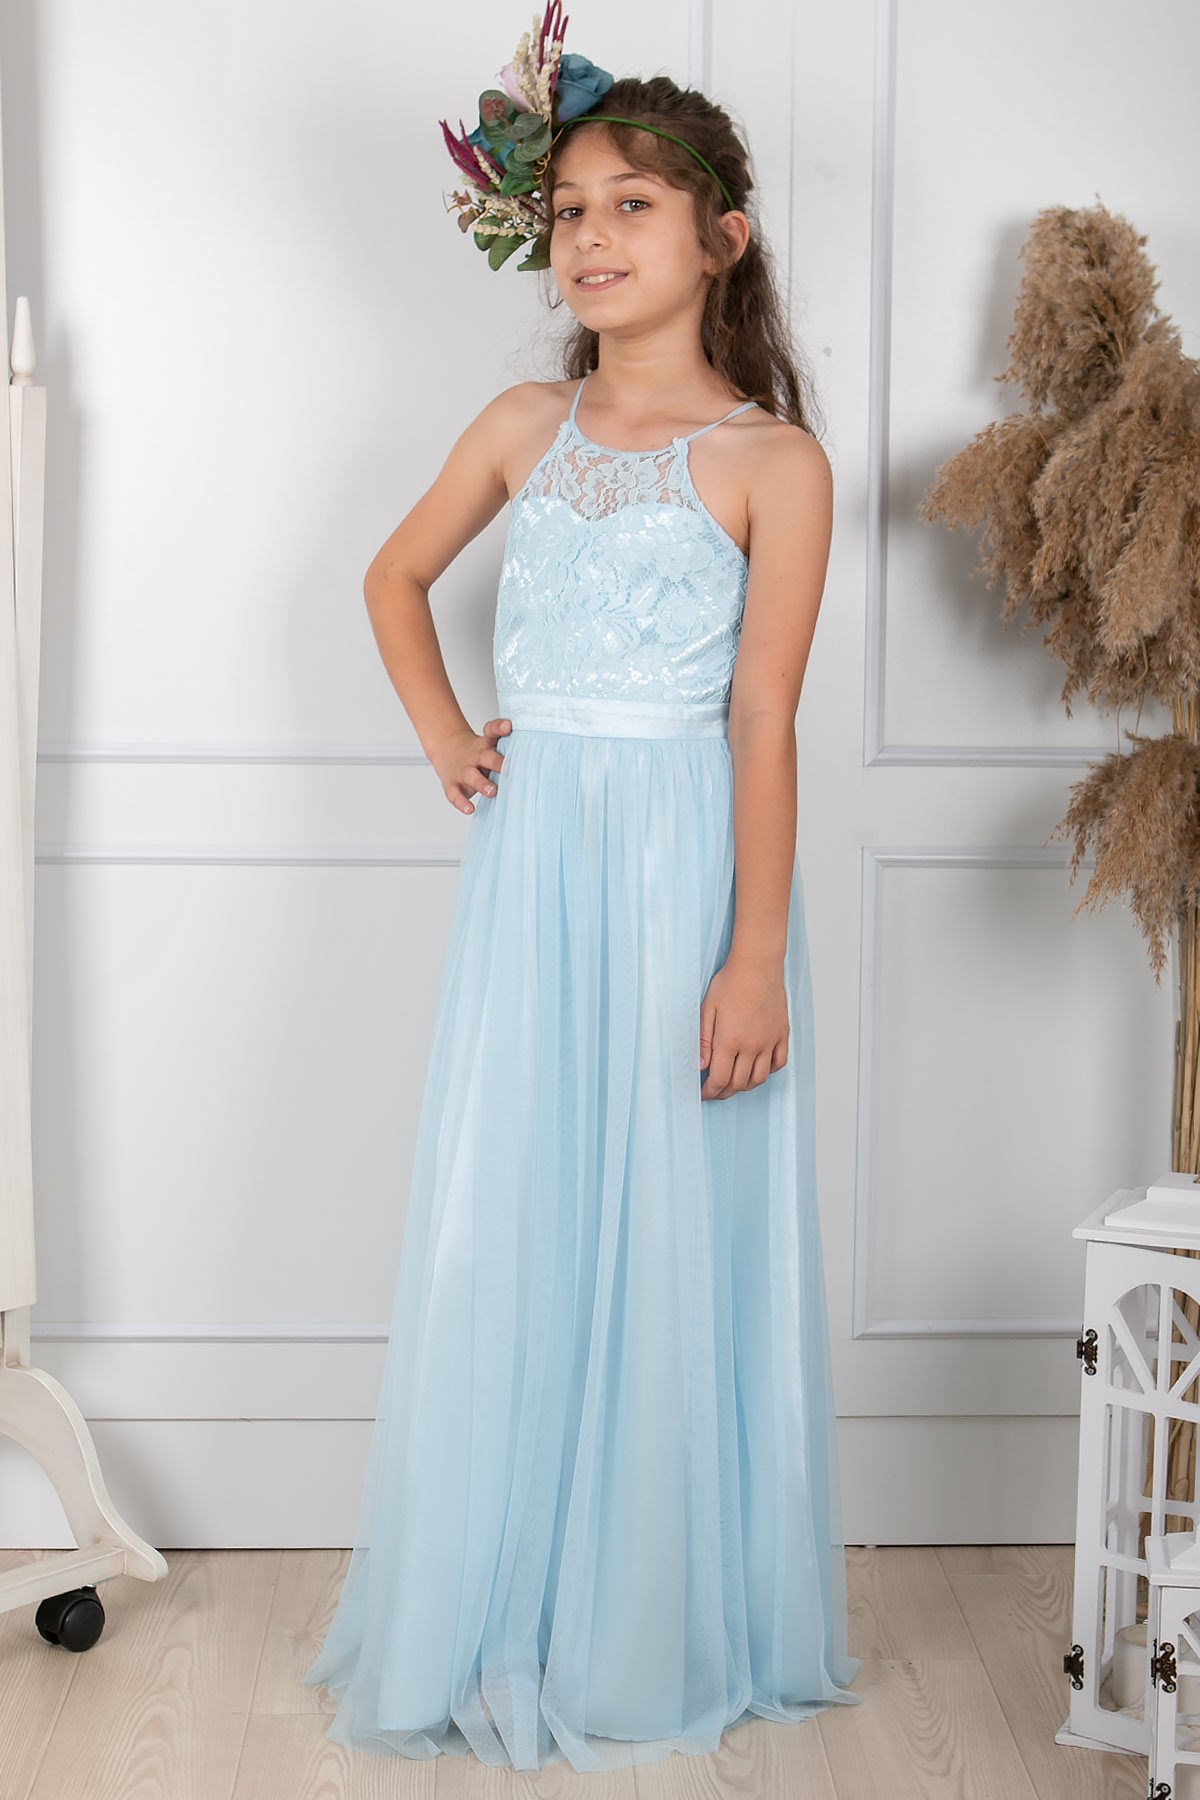 Lace Detailedtool Children's Evening Dresses Baby Blue  MDV302MDV302-BEBE MAVİFahima